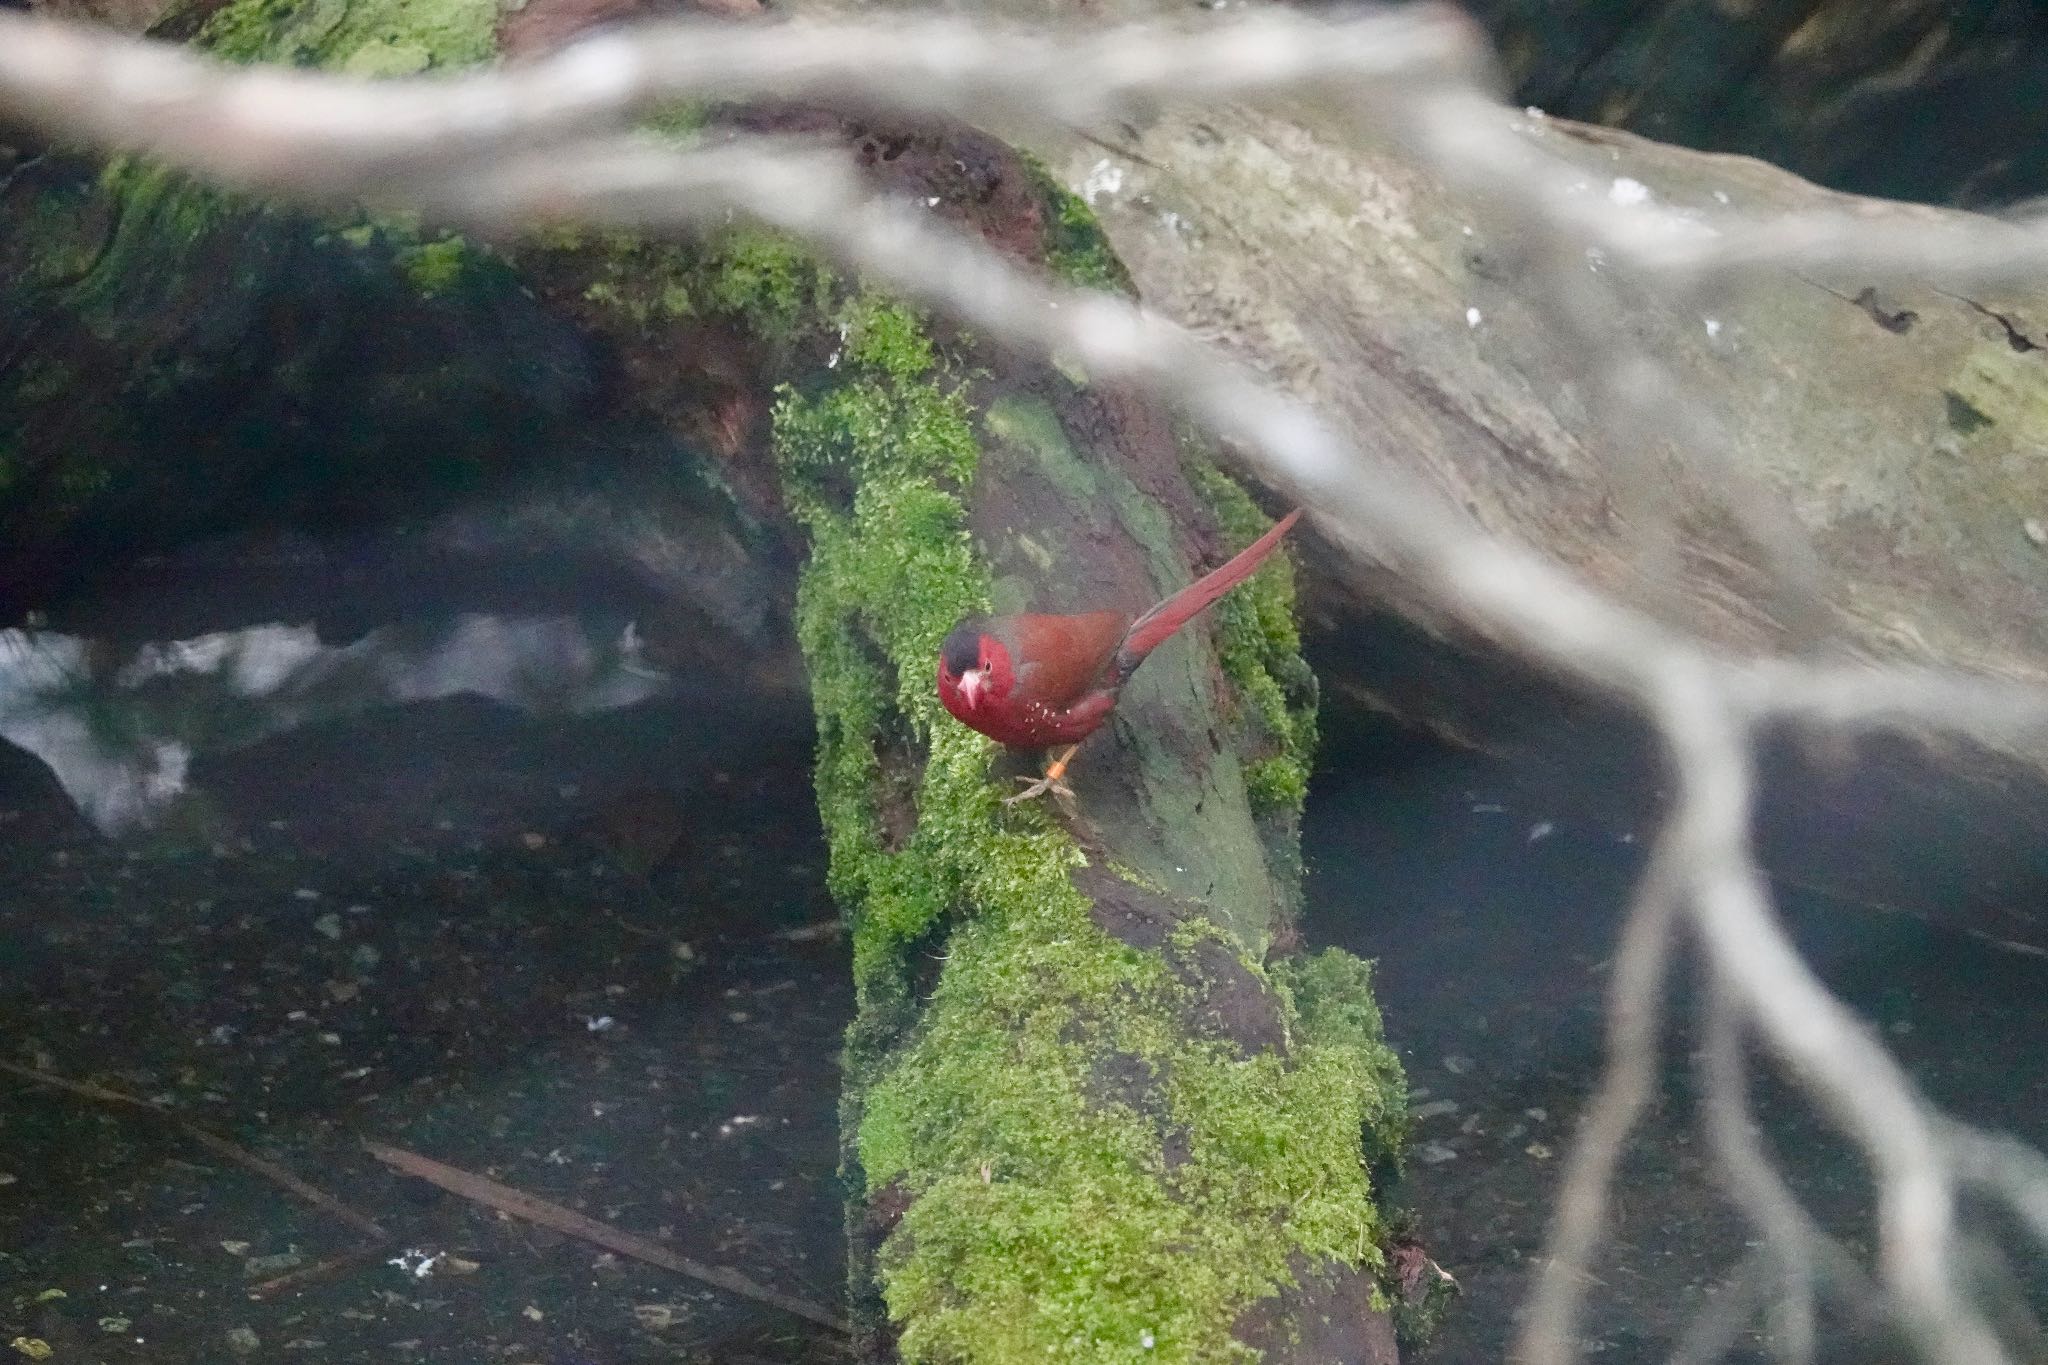 Photo of Crimson Finch at Taronga Zoo Sydney  by のどか